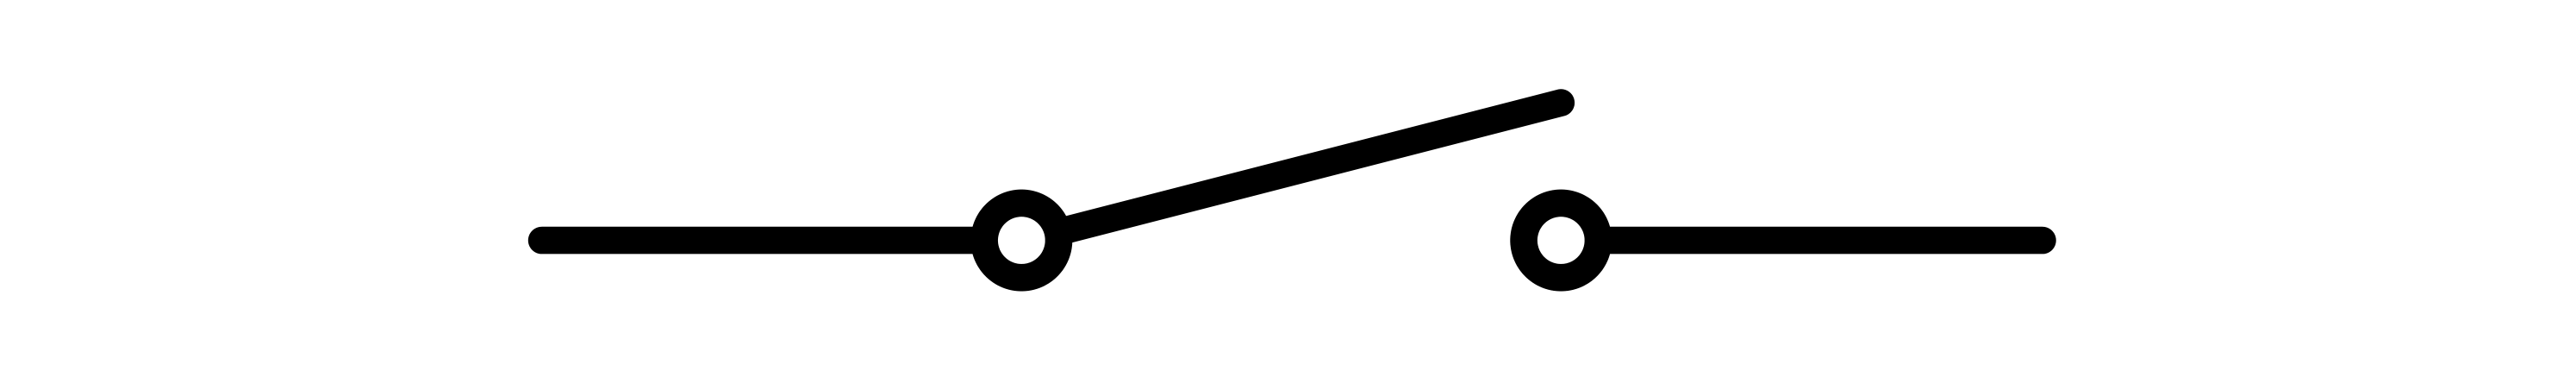 Figure 7: Single Pole Single Throw (SPST) Switch